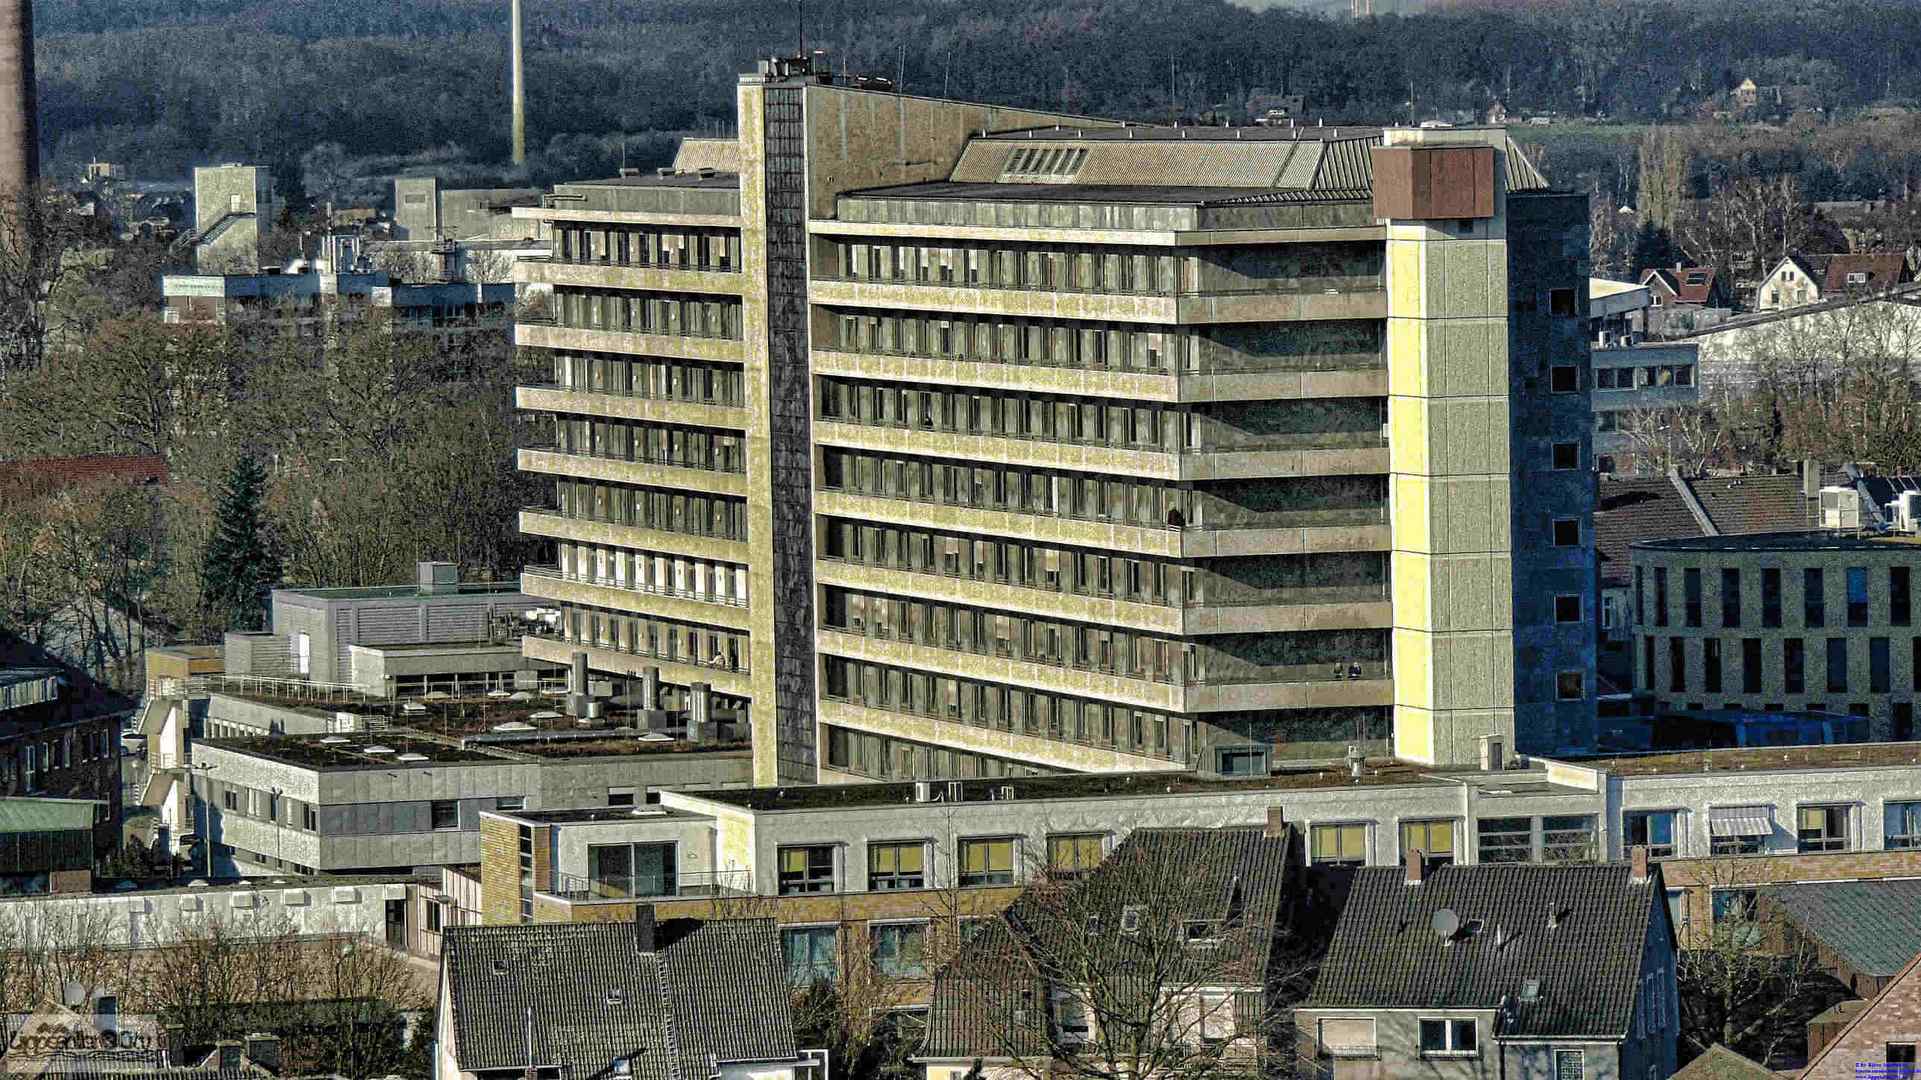 St. Marien Hospital Lünen